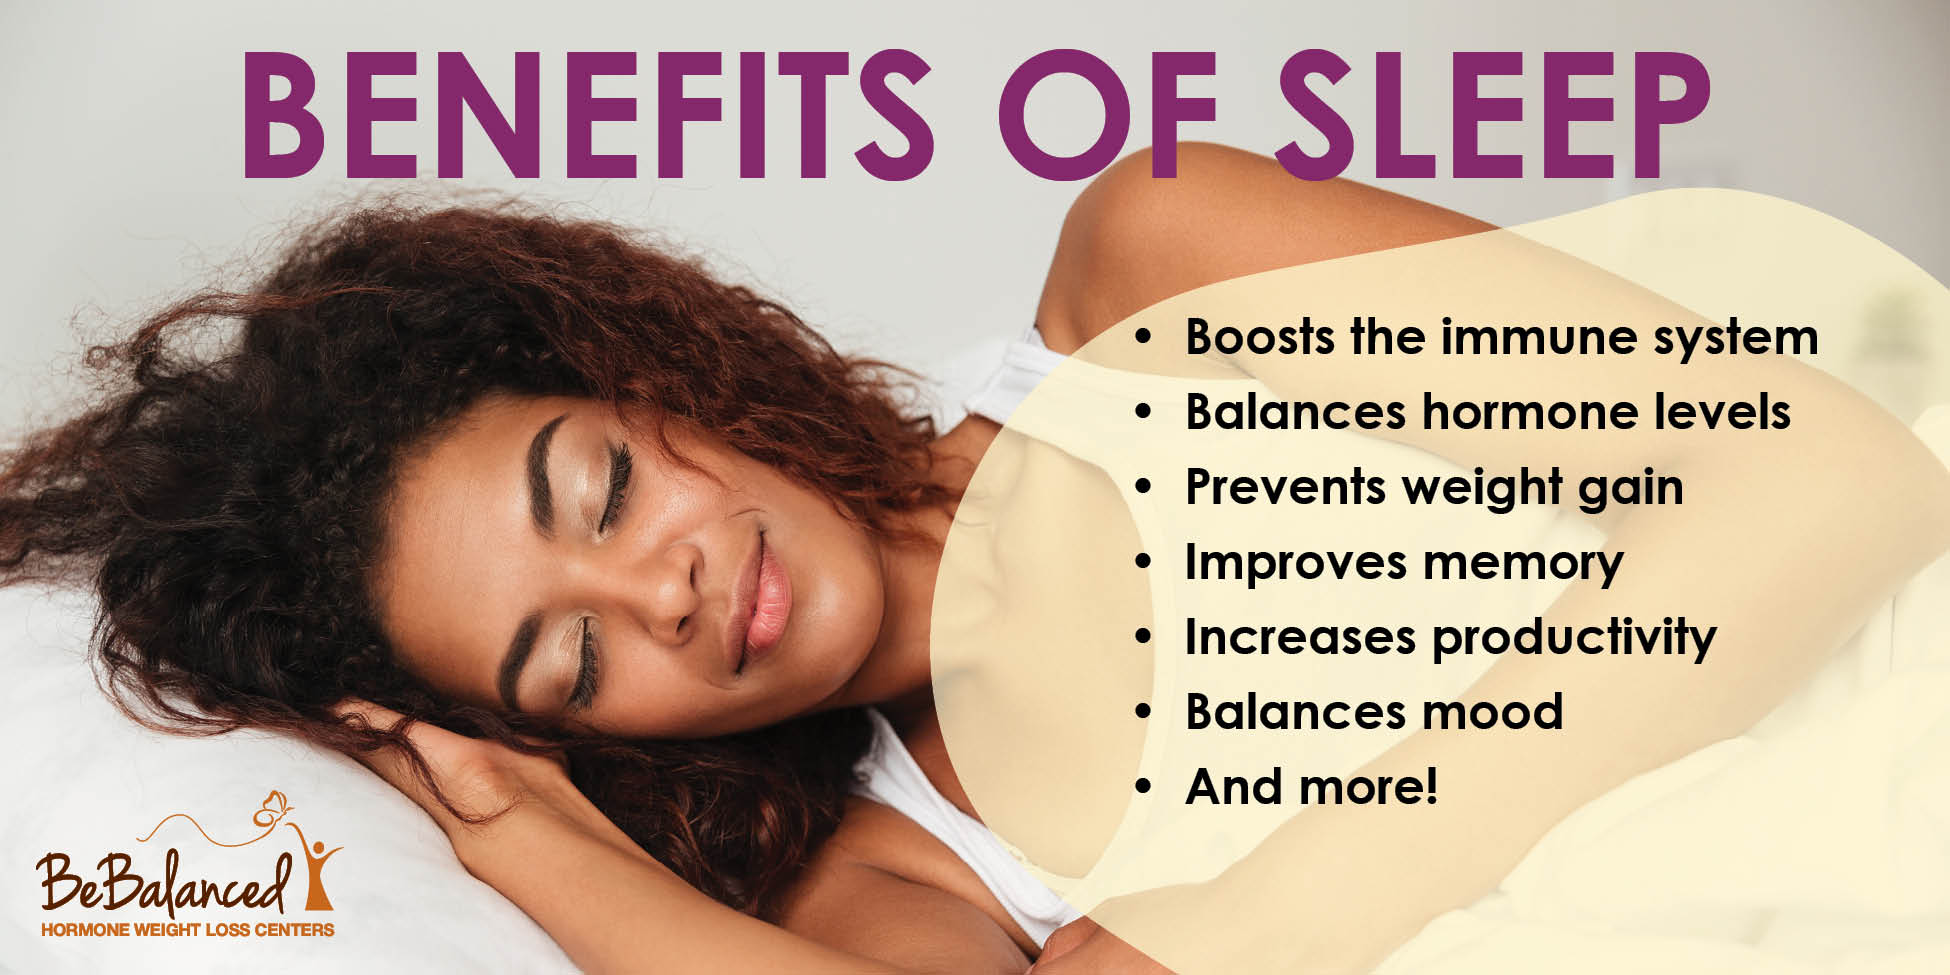 Some of the benefits of sleep.